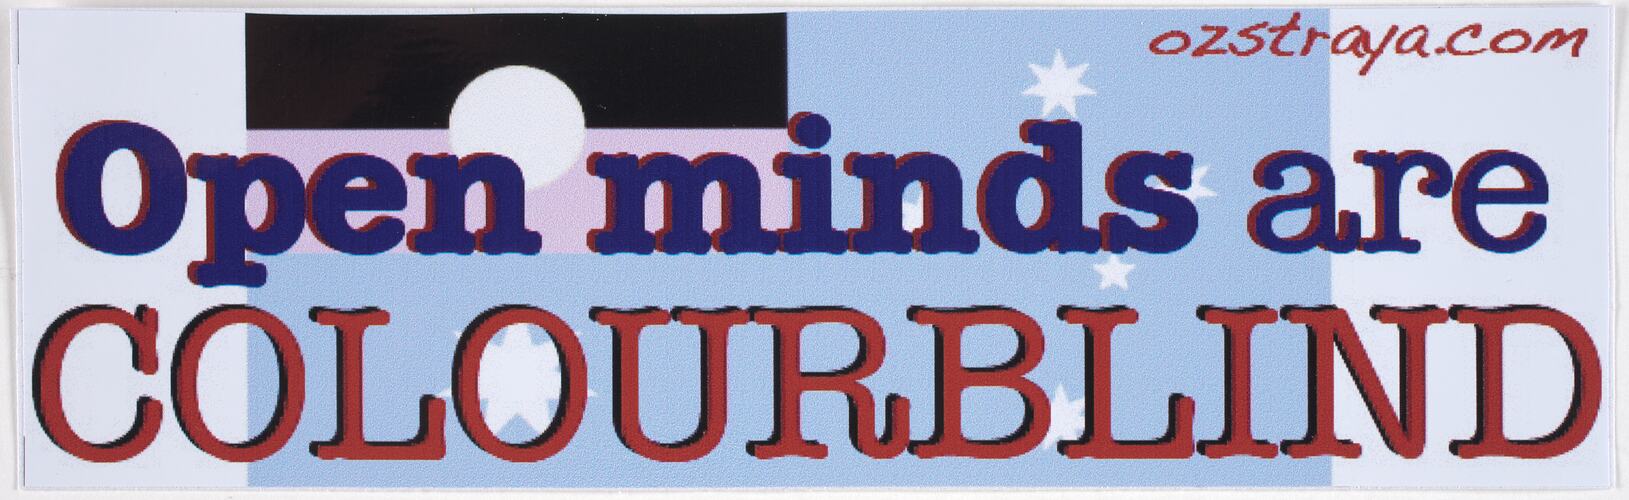 Sticker - 'Open Minds Are Colourblind', Australians Against Racism & Discrimination.